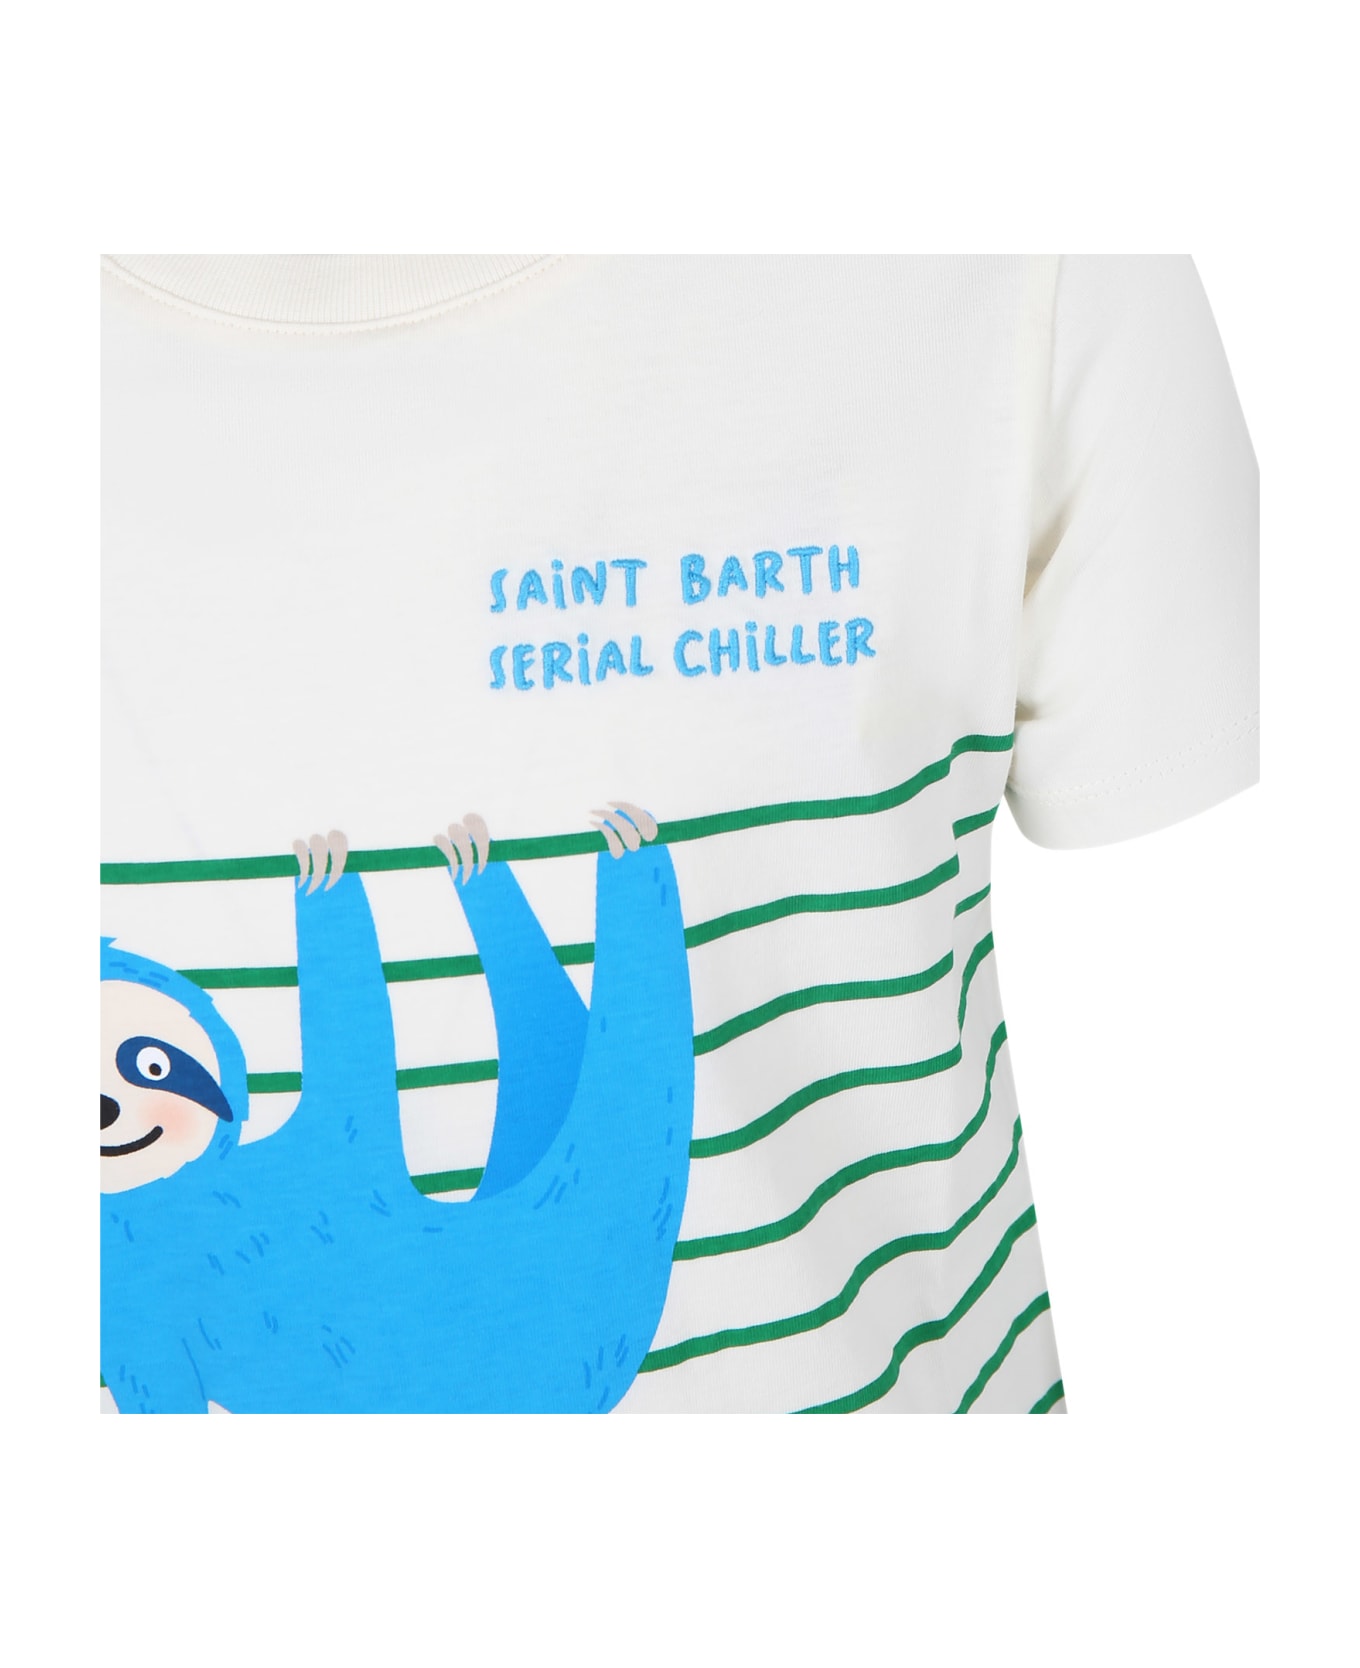 MC2 Saint Barth Ivory T-shirt For Kids With Sloth Print - Ivory